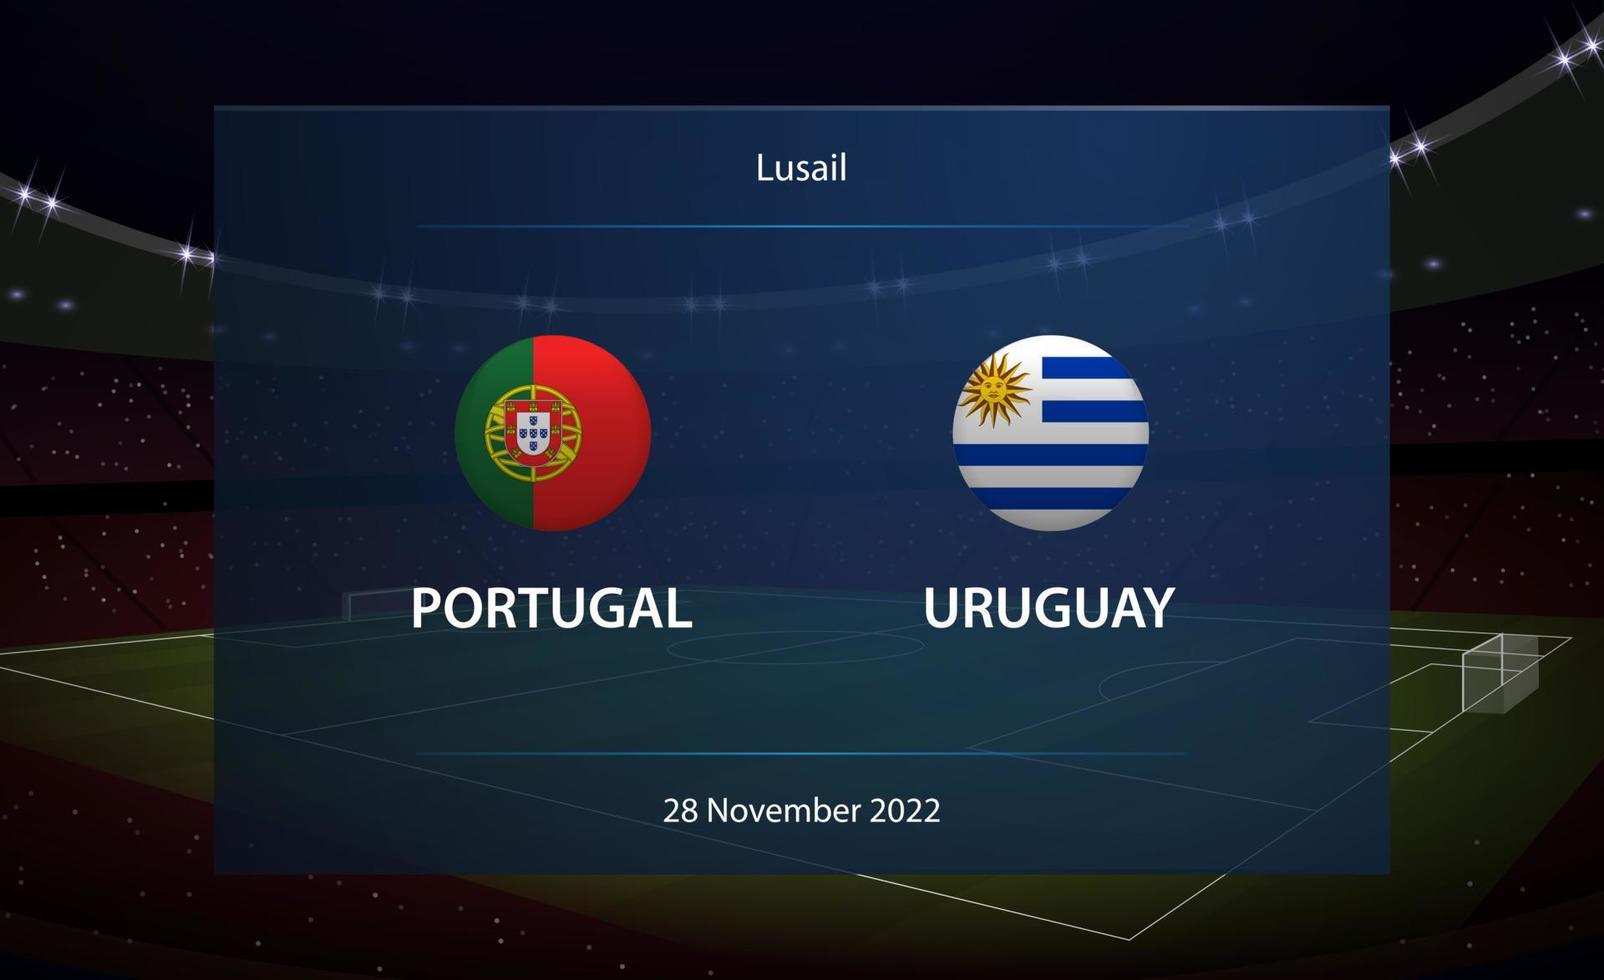 le Portugal contre Uruguay. Football tableau de bord diffuser graphique vecteur